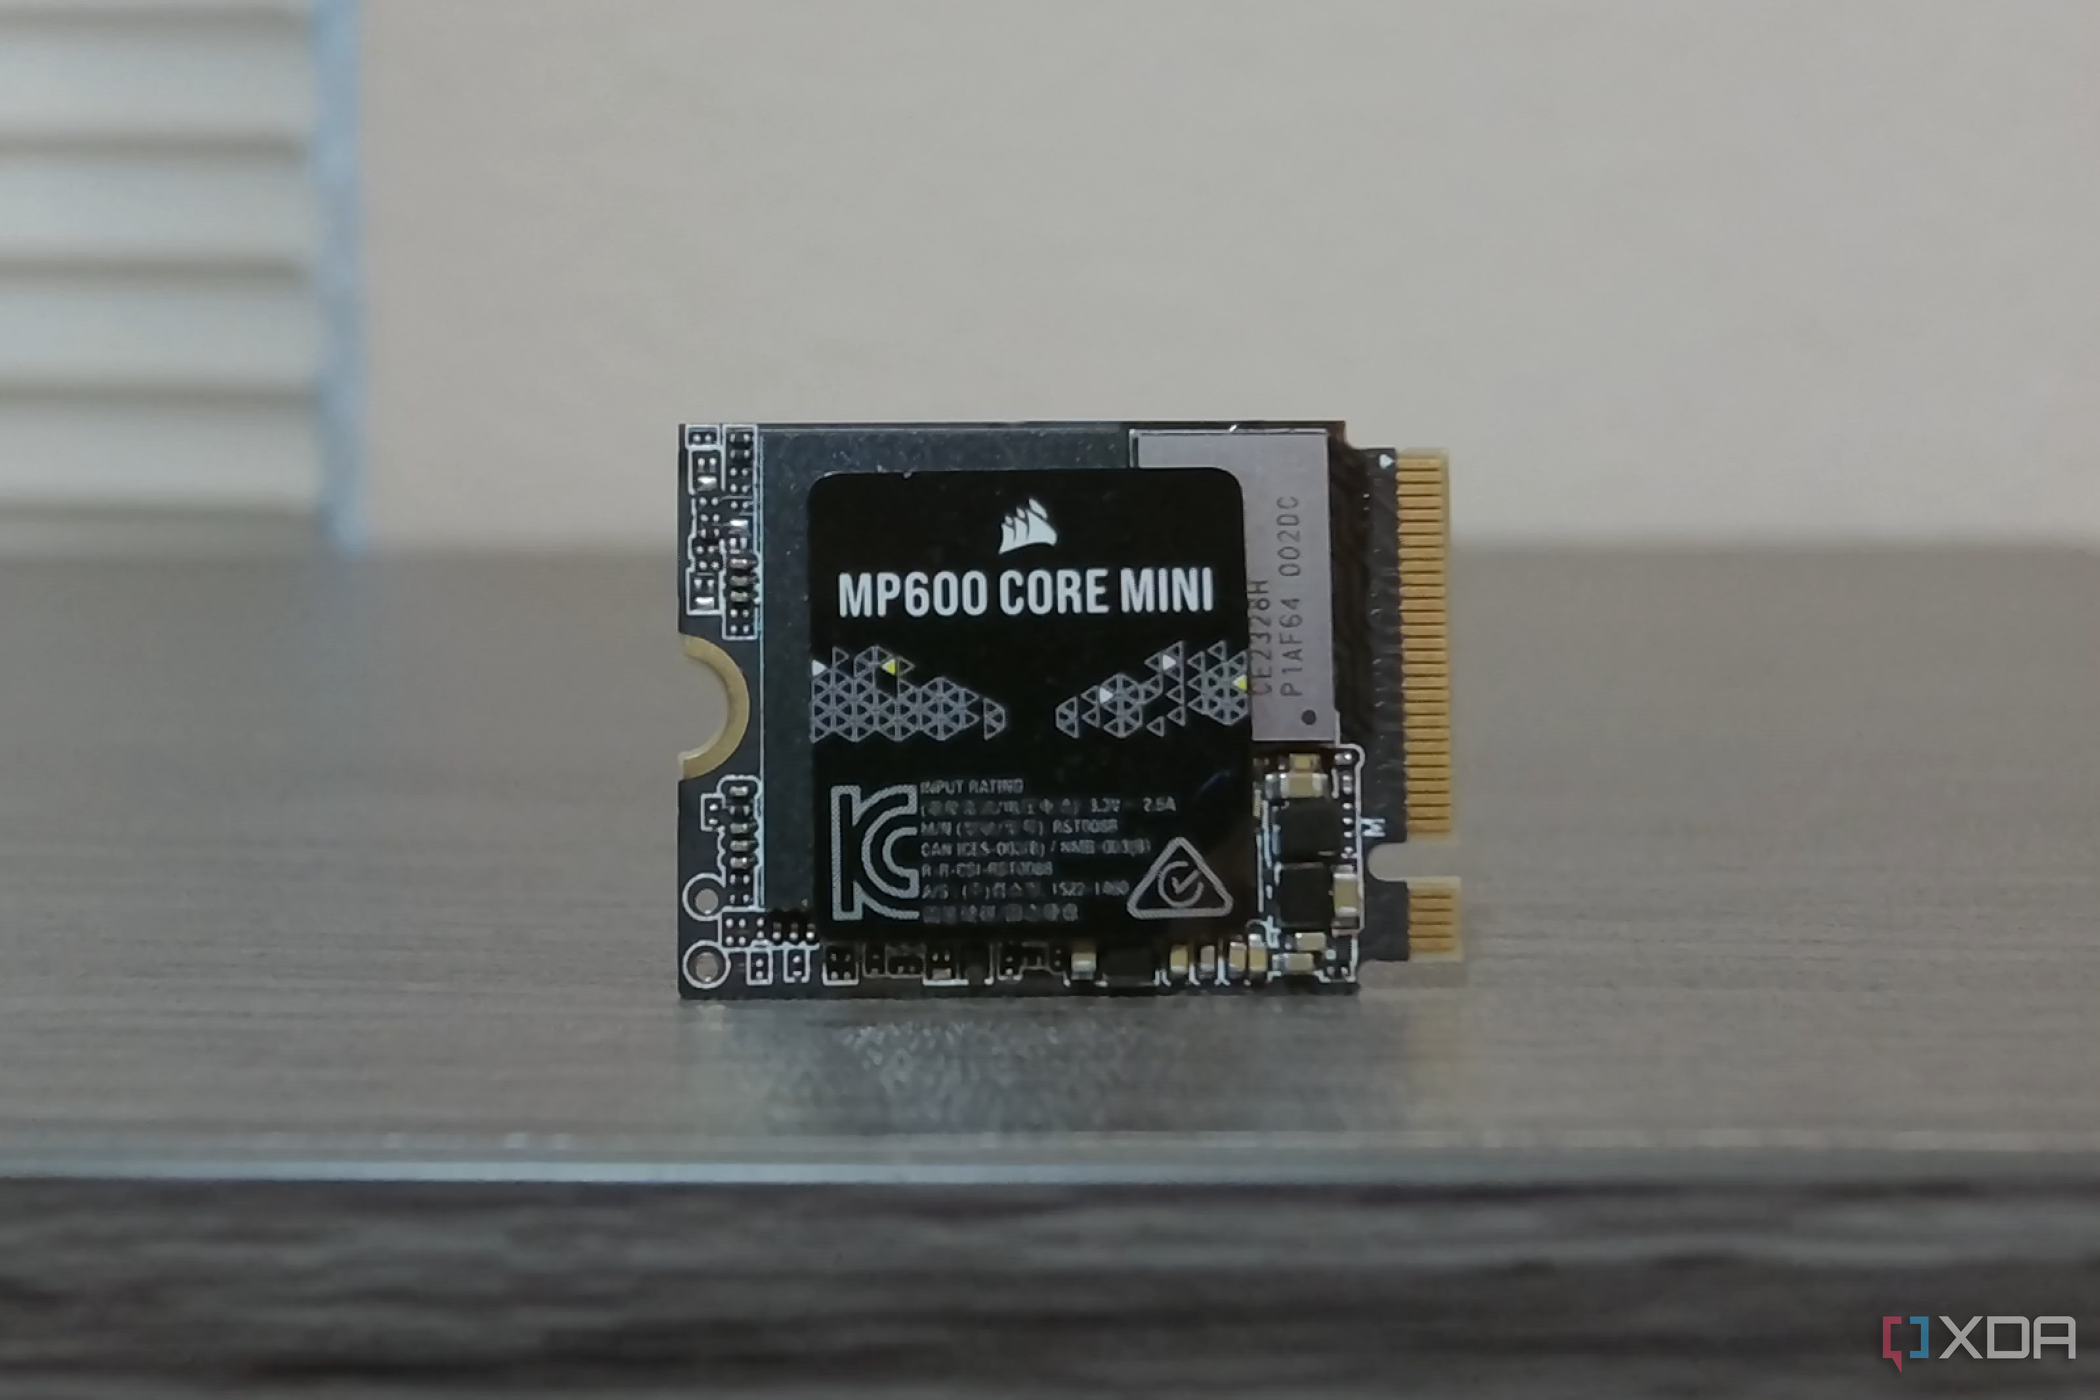 Corsair MP600 Core Mini SSD close up.